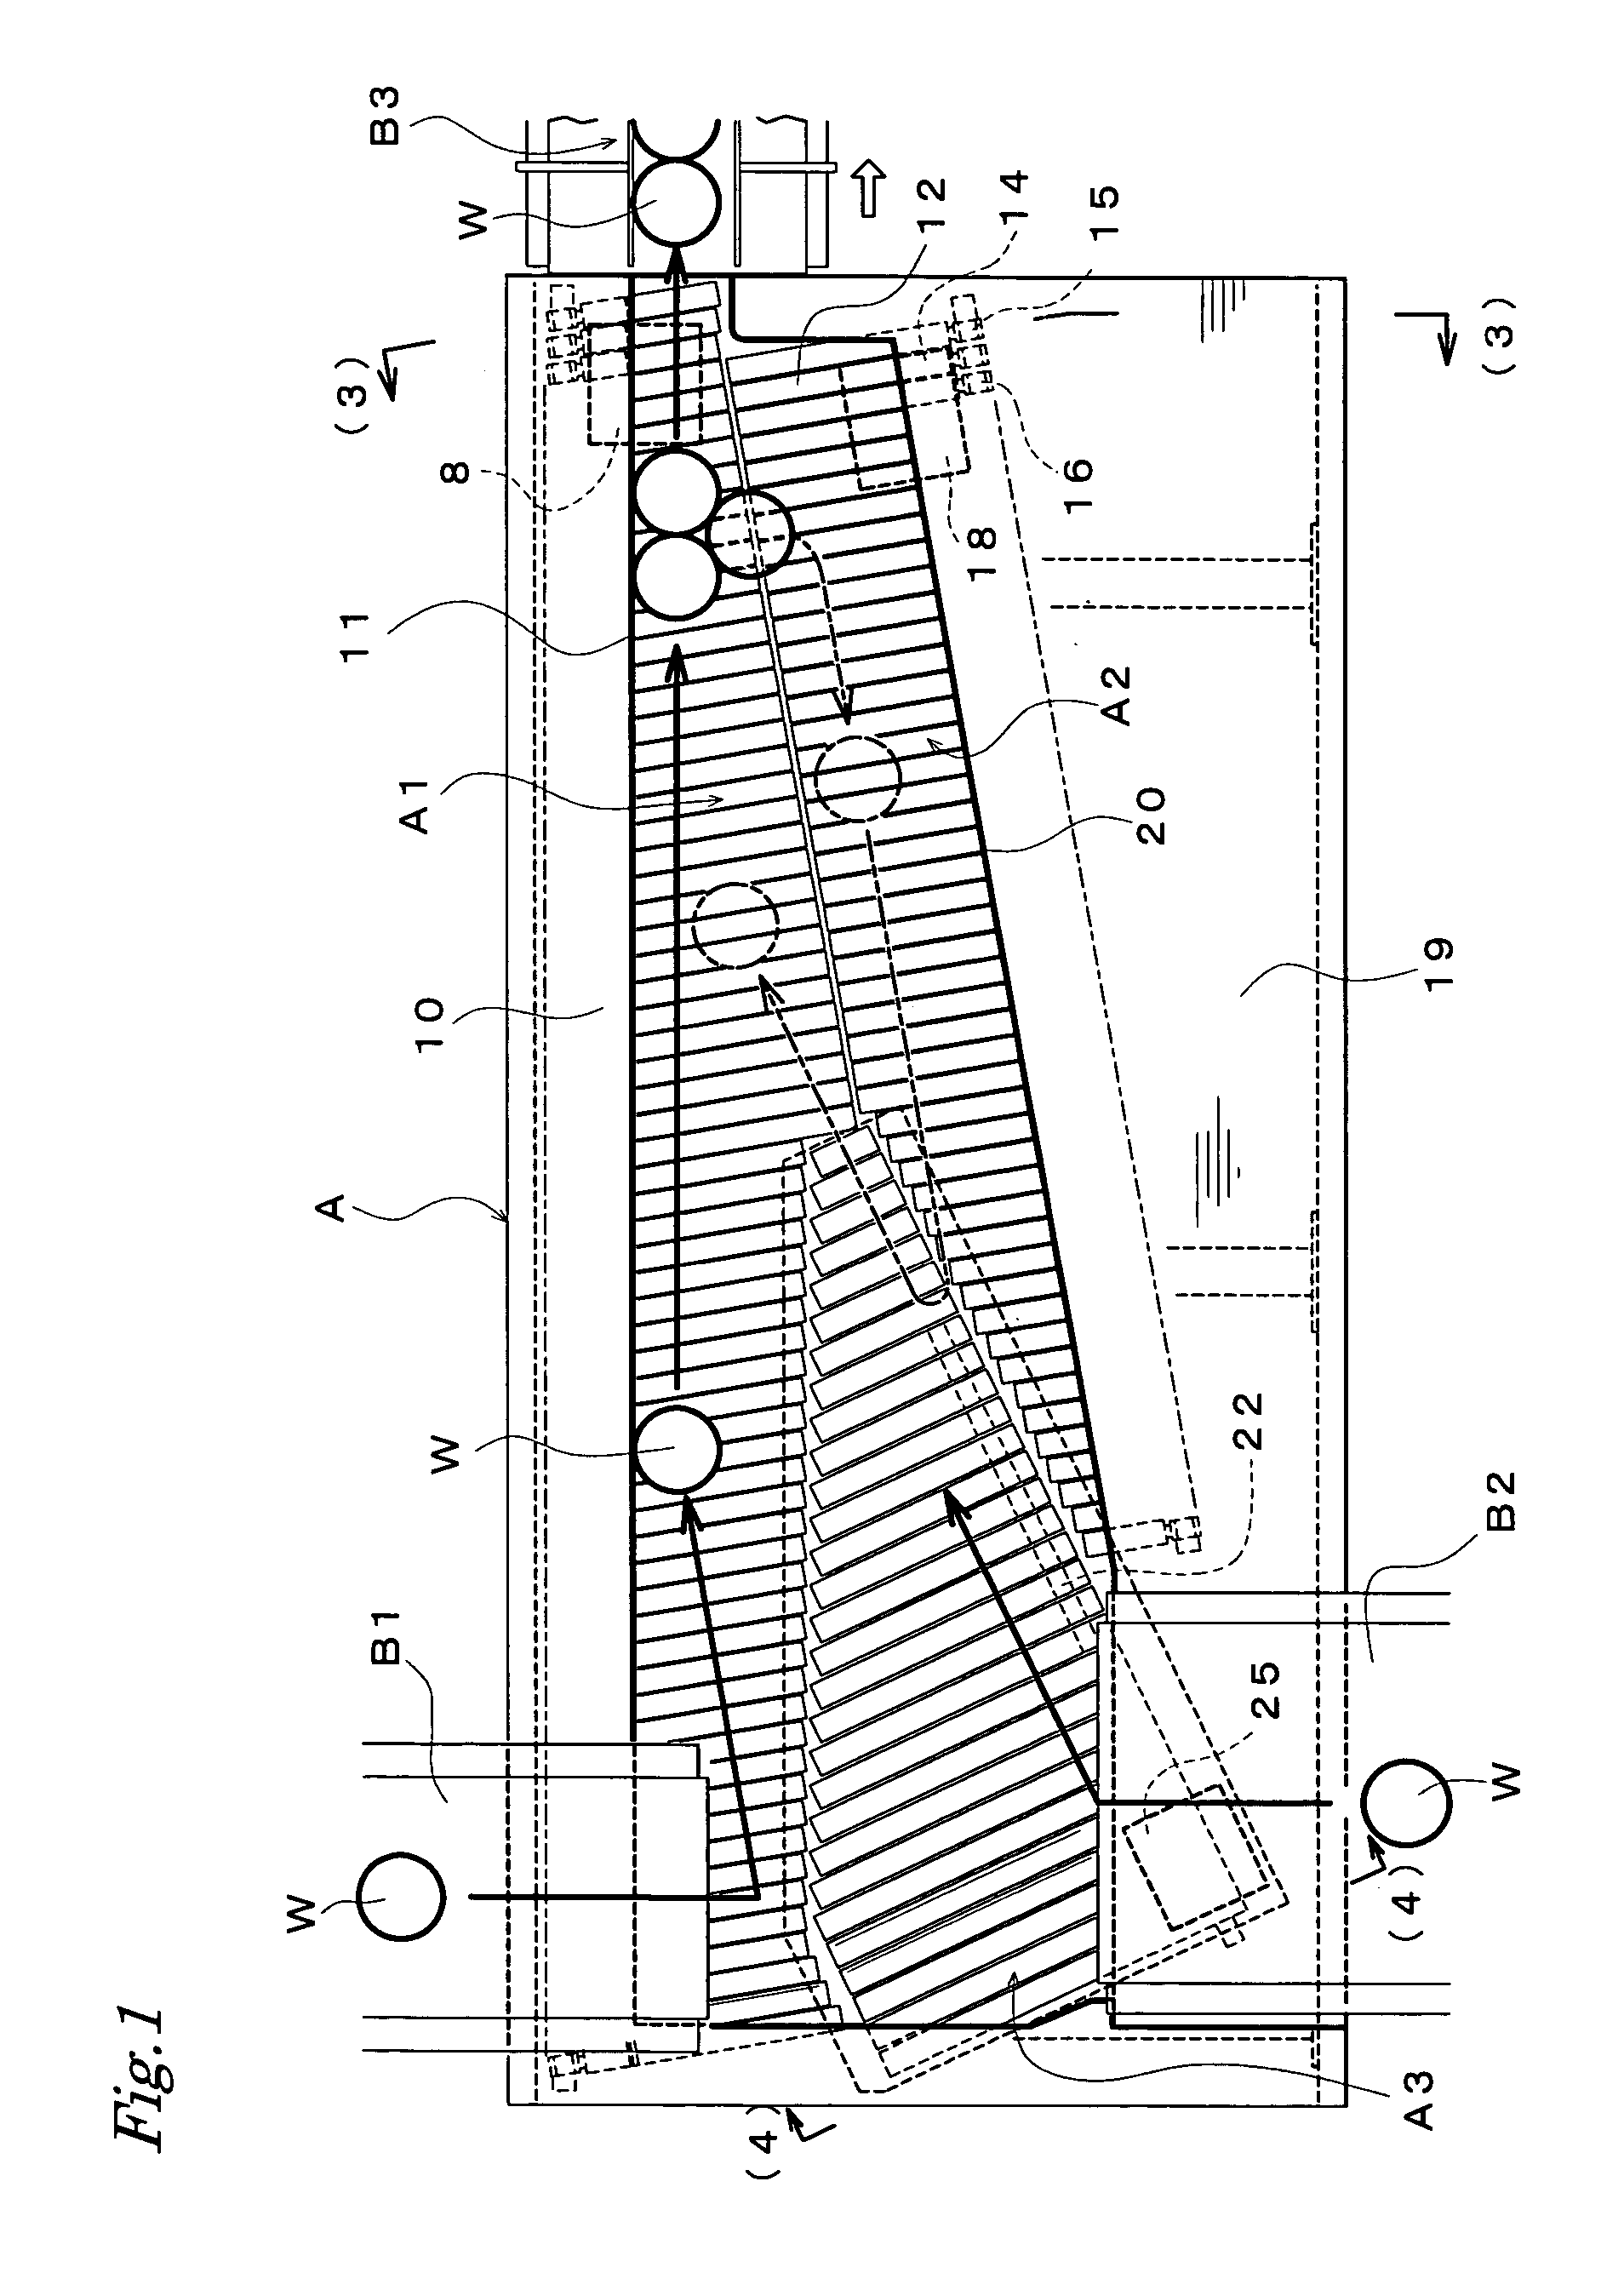 Circulation type line-up conveying apparatus